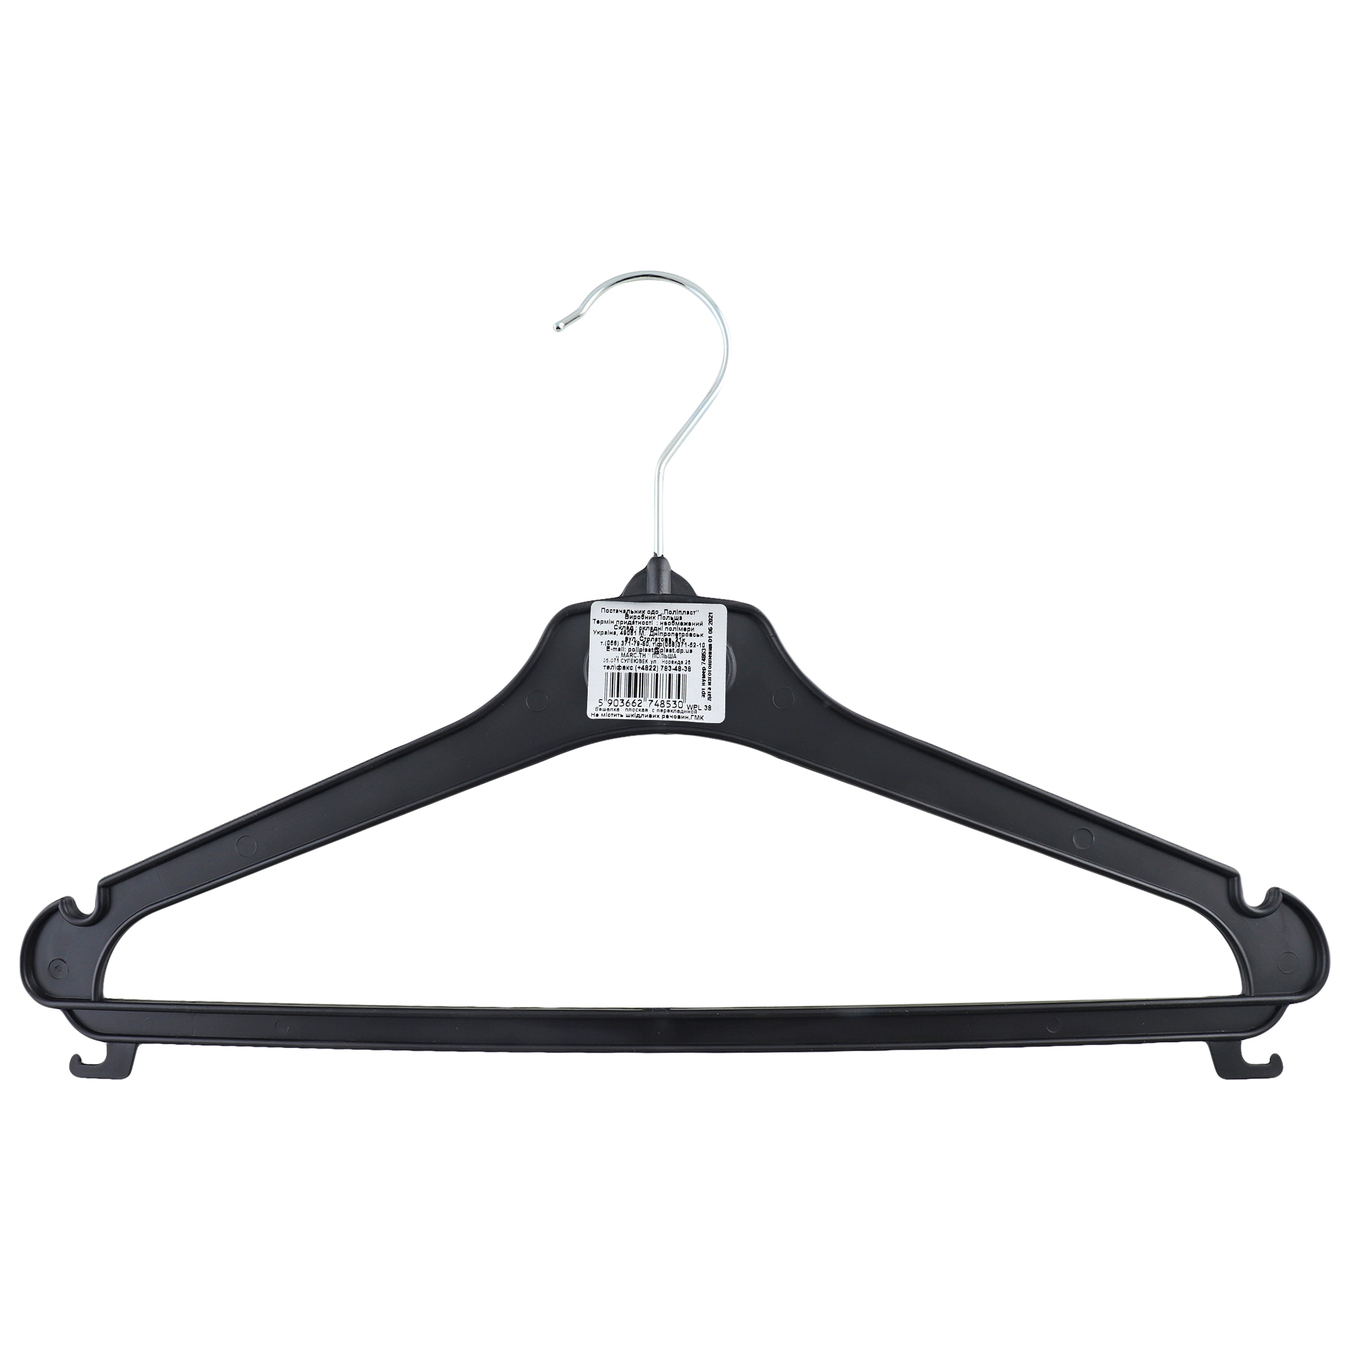 Marc-tn hanger for clothes 38 cm 2